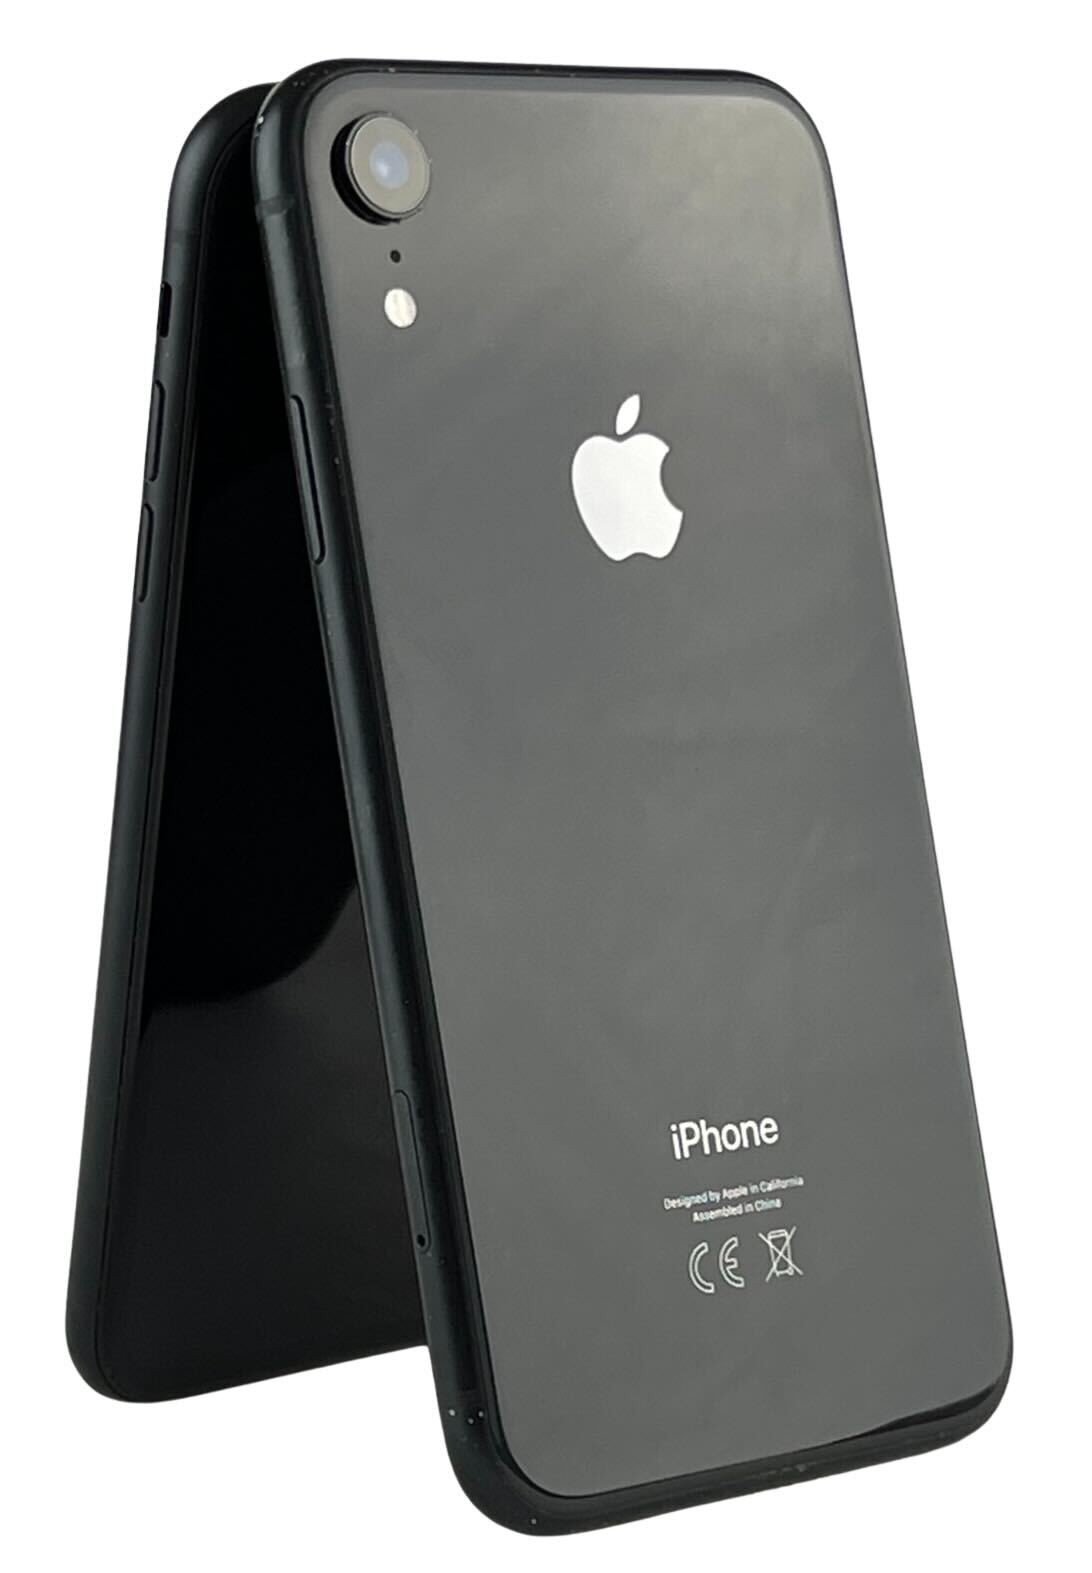 iPhone XR 128GB Black |Garanti 1år|